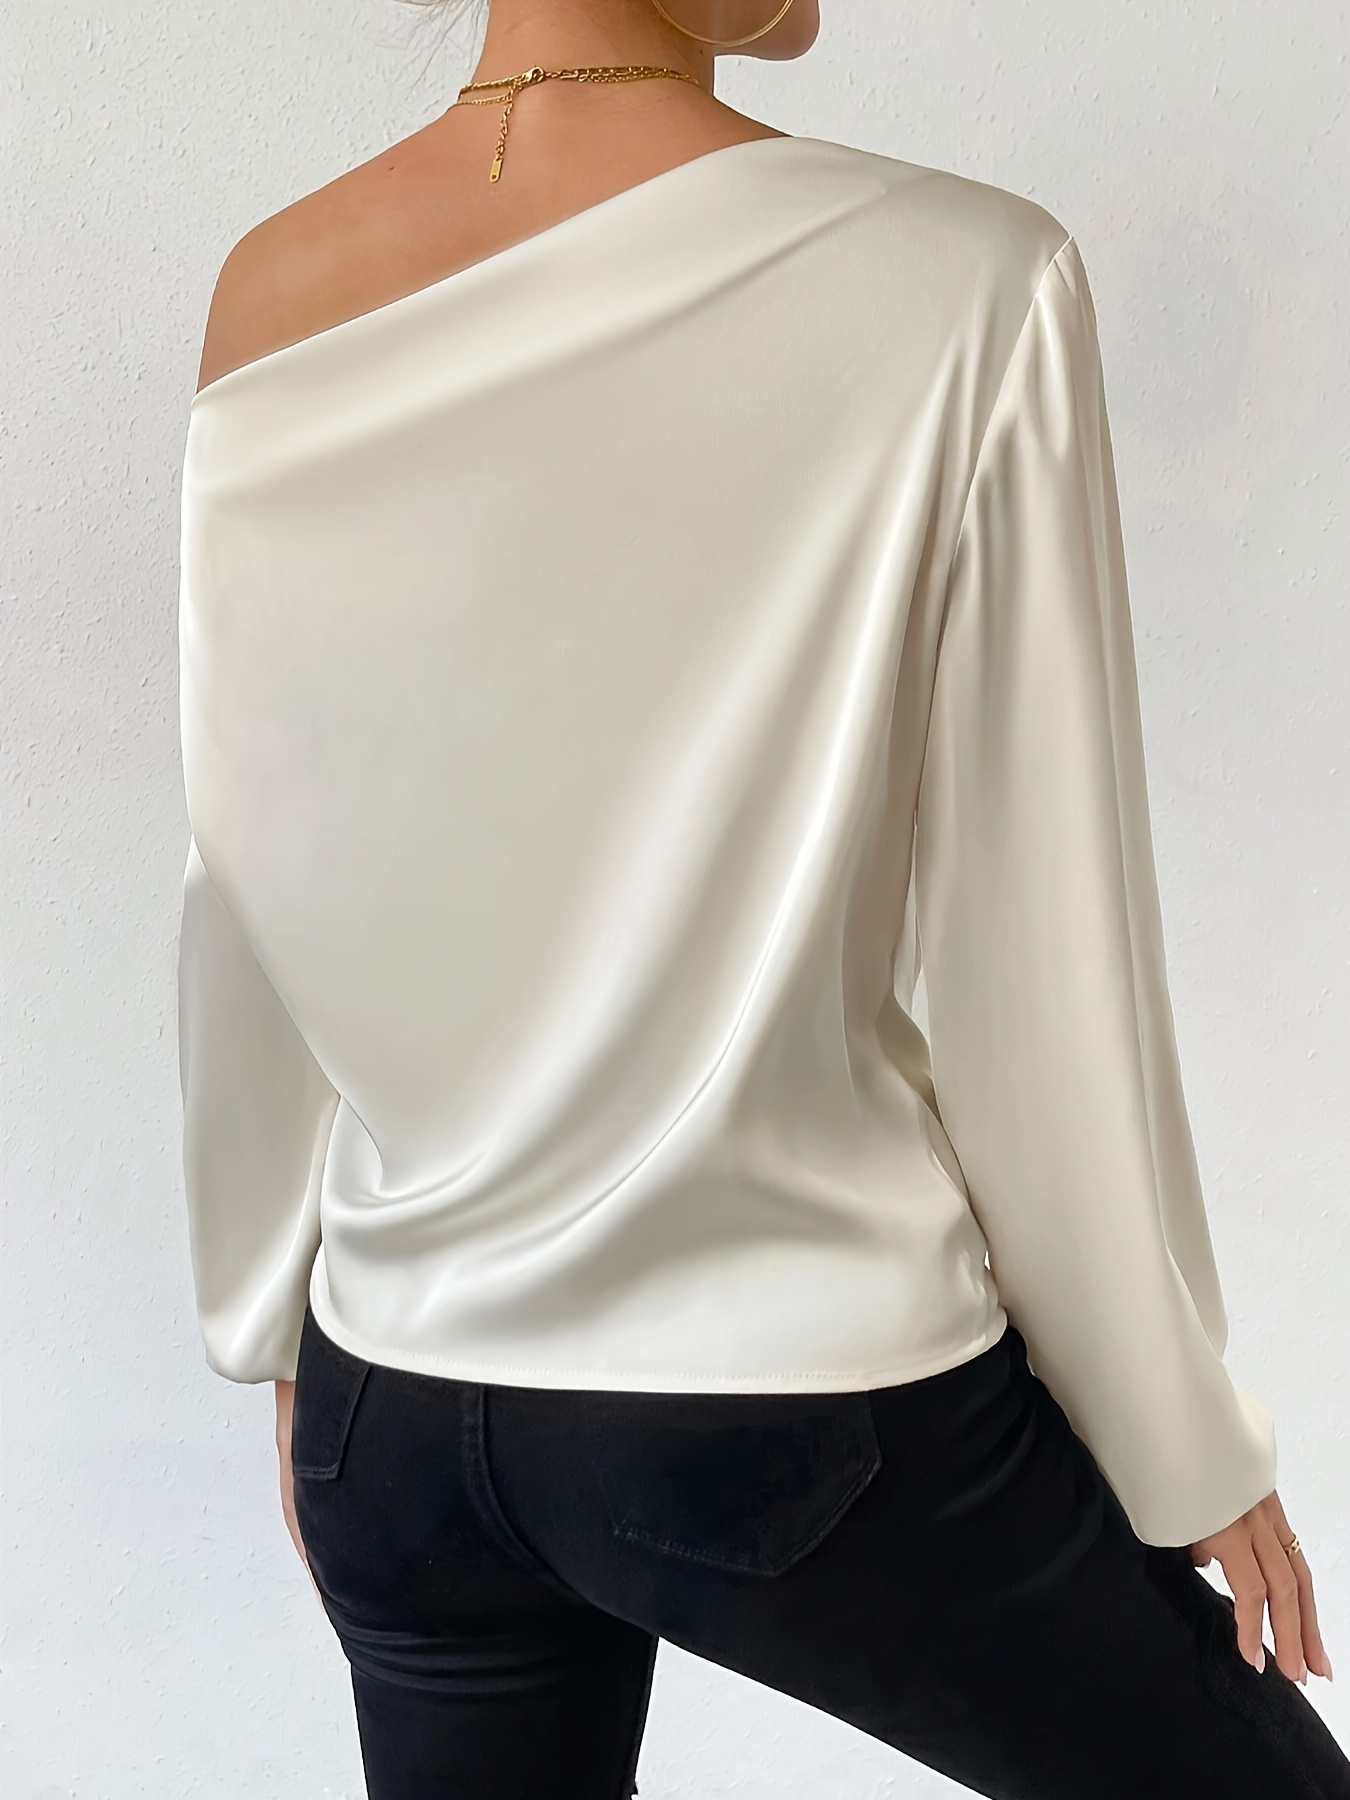 solid one shoulder skew neck blouse elegant long sleeve blouse for spring fall womens clothing details 0